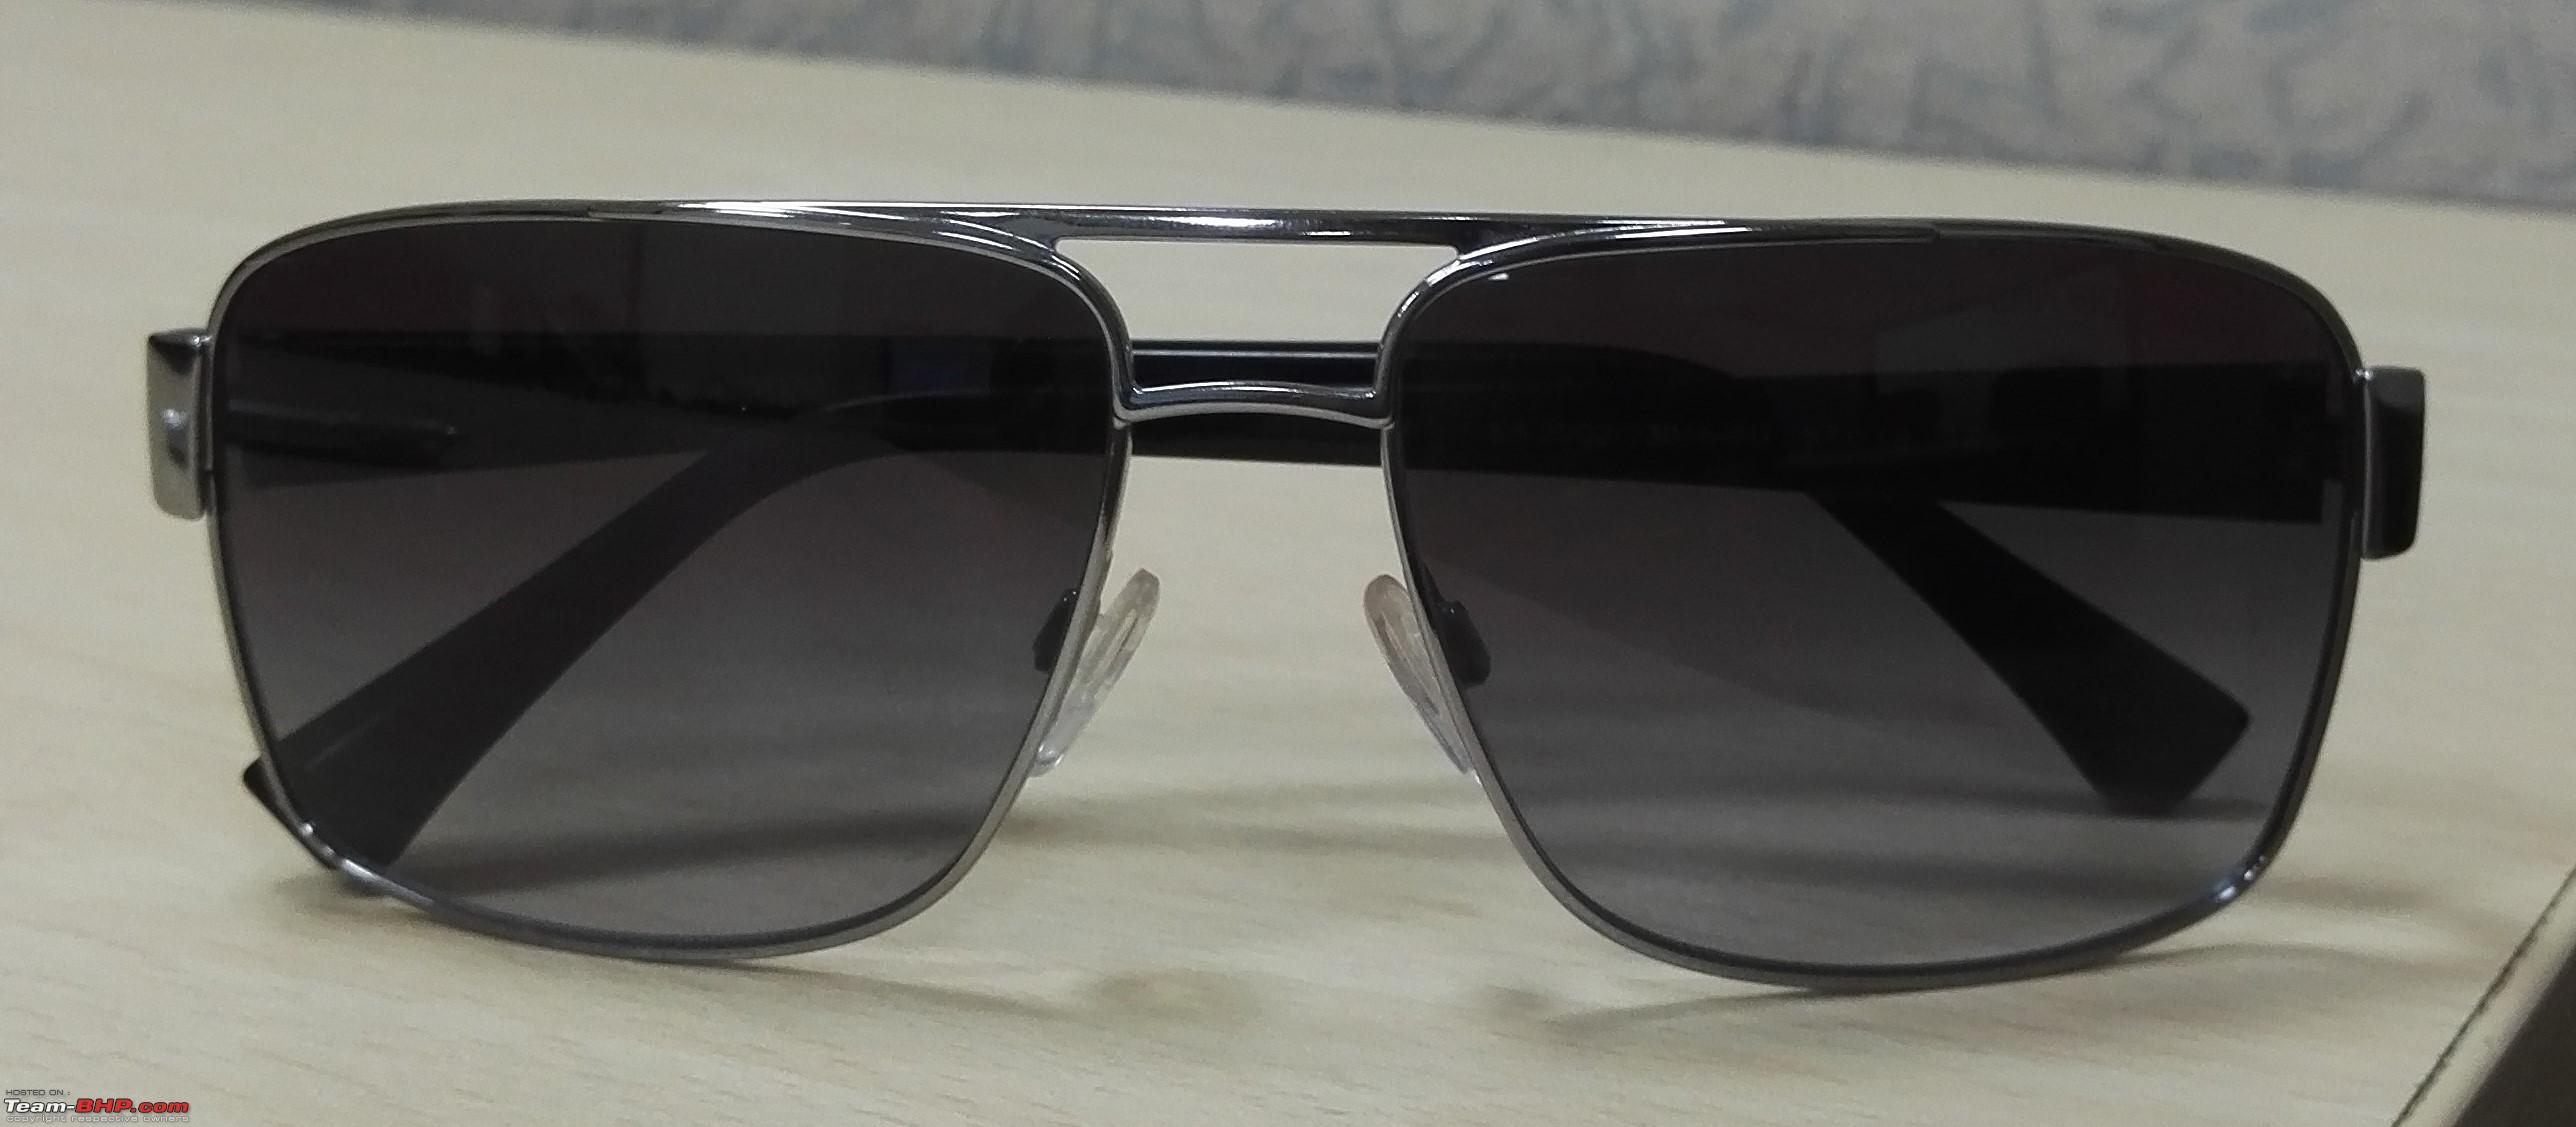 Ray Ban Nepal | Ray Ban Sunglasses for Men | latest Ray Ban Sunglasses  price in Nepal